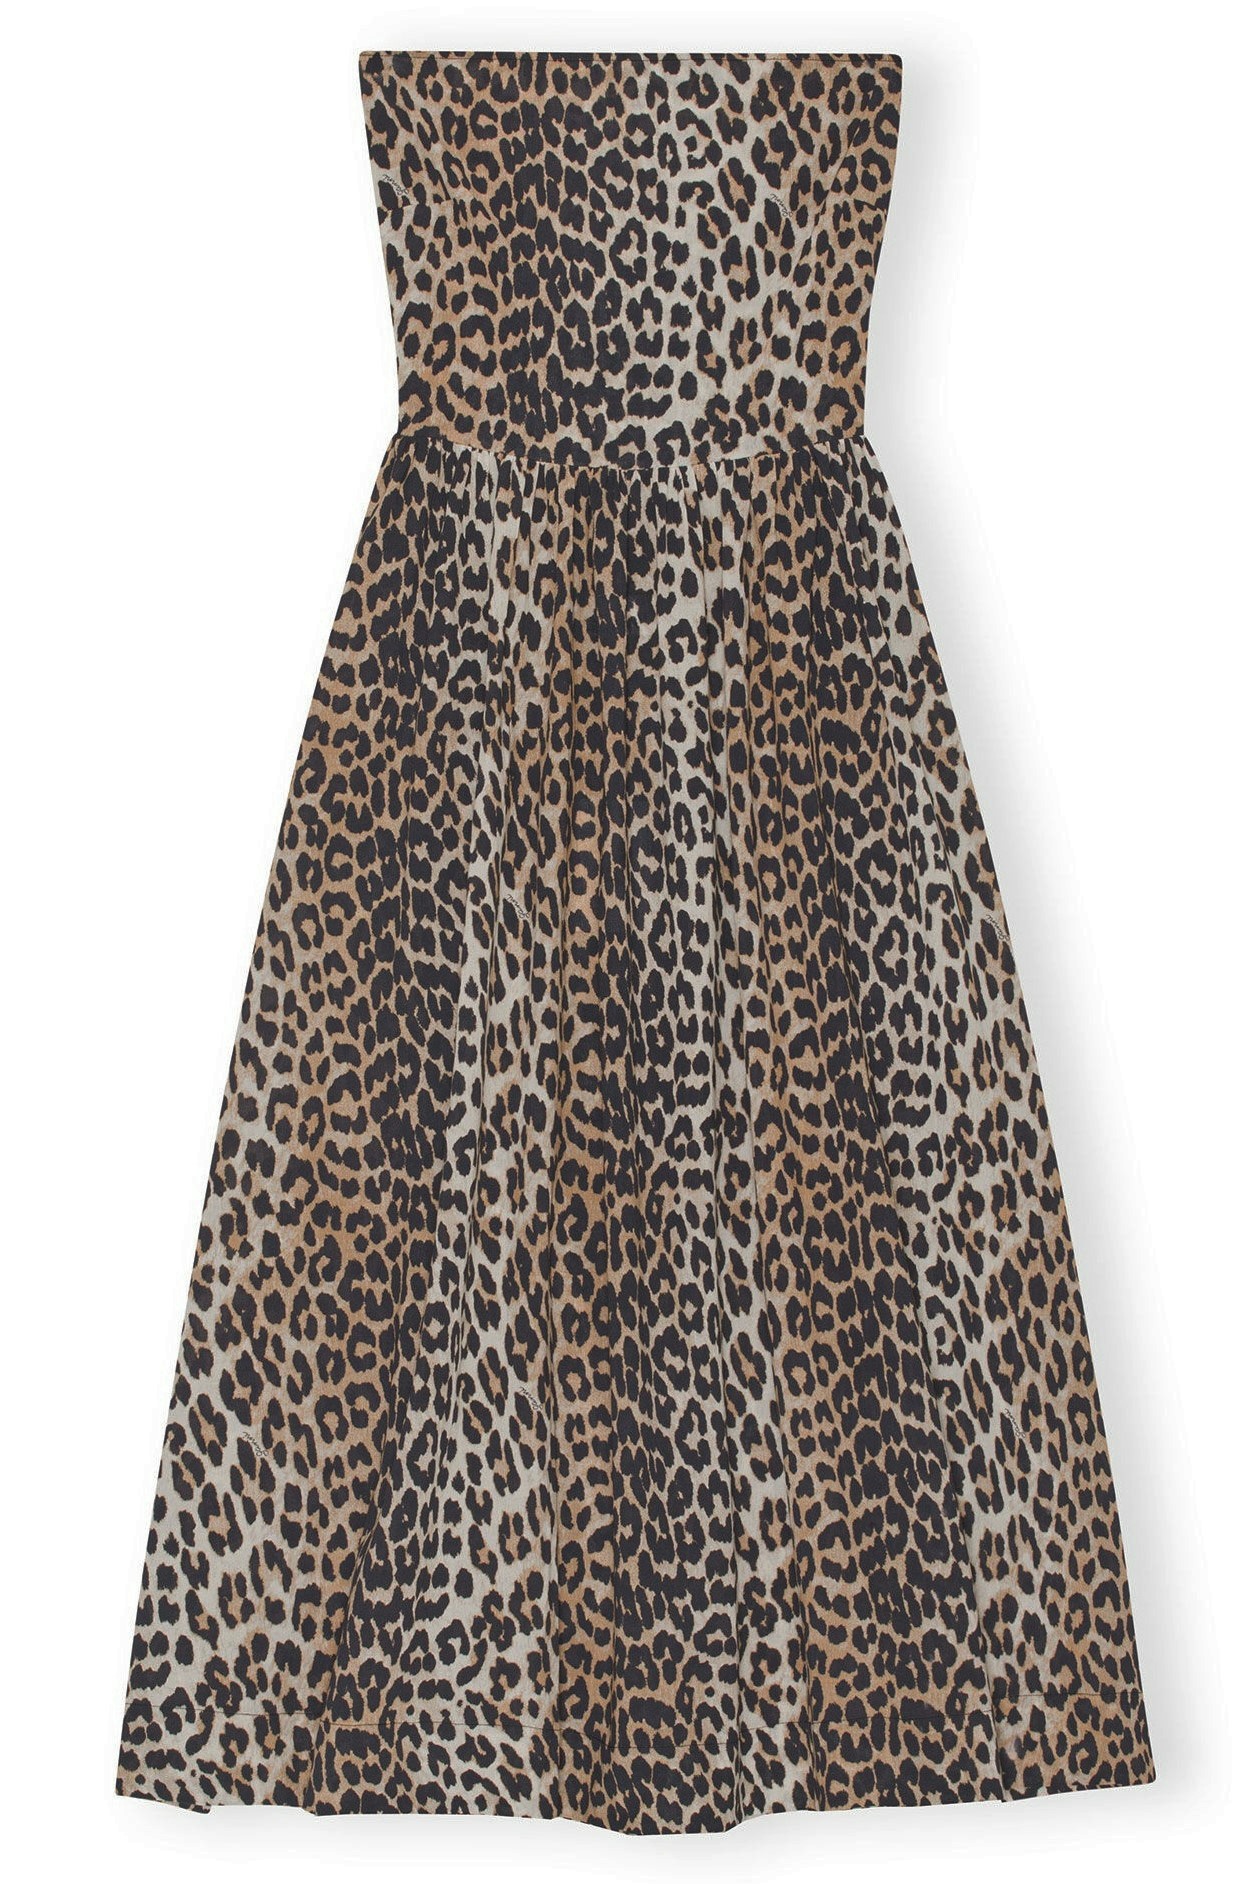 GANNI Light Cotton Tieband Multifunctional Dress in Leopard XXS / XS